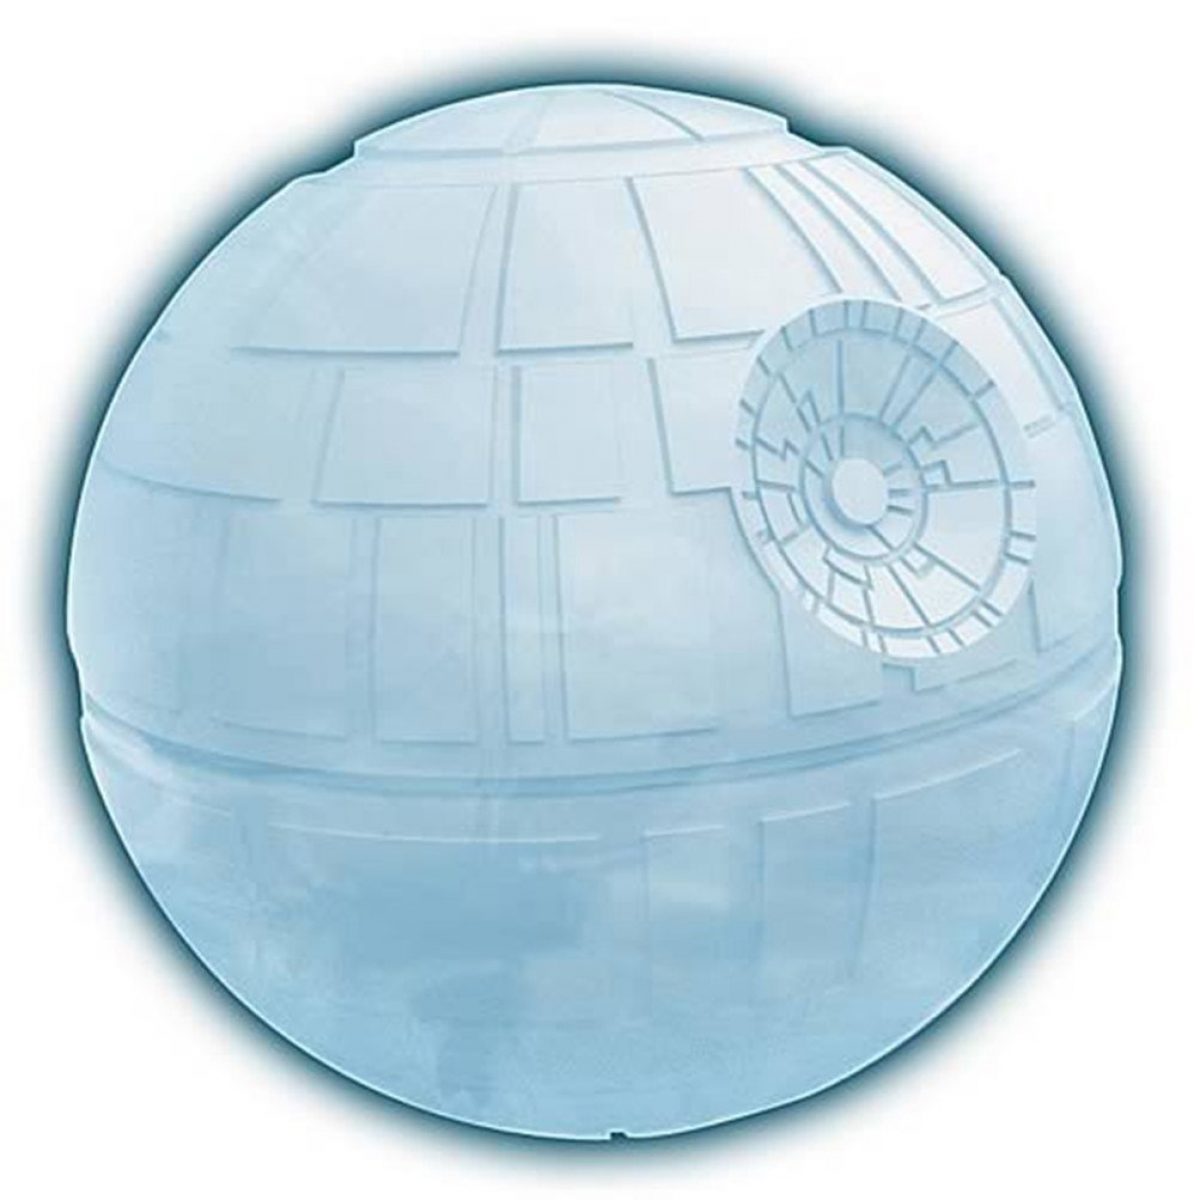 Star Wars™ Deathstar Ice Molds & Glasses Set